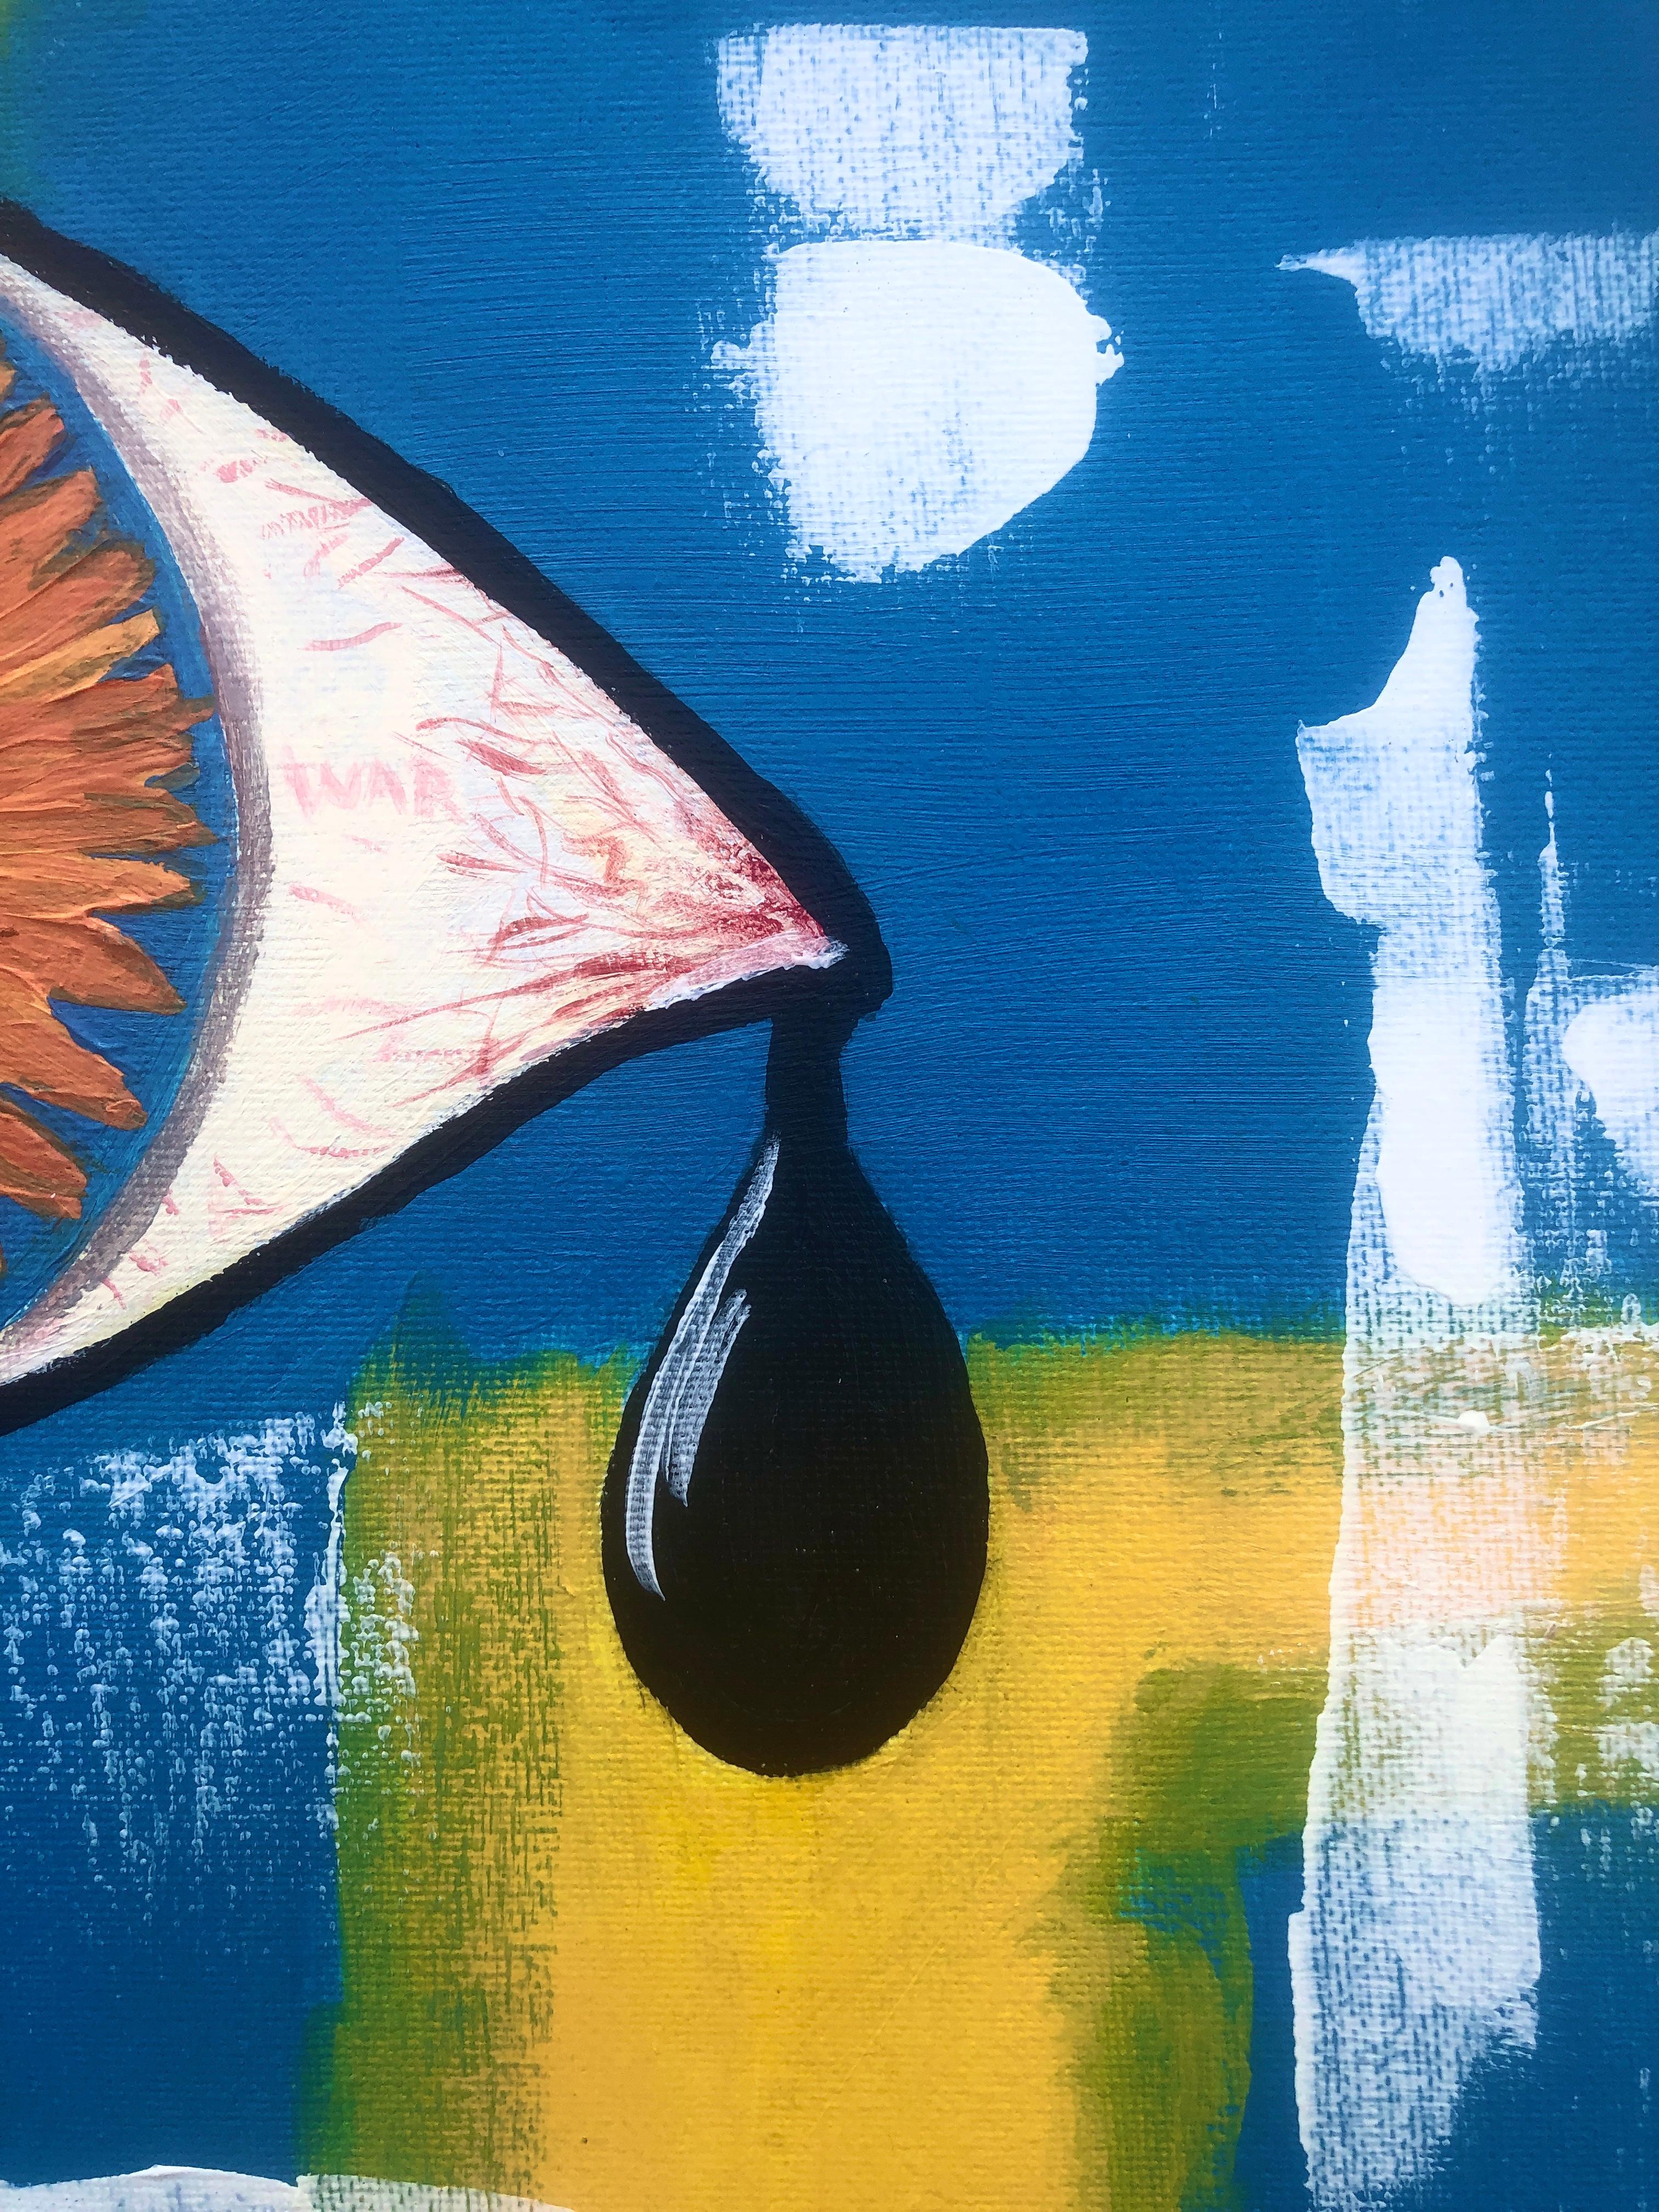 Black tear acrylic on canvas painting Ukraine - Symbolist Painting by Alicia Ramos